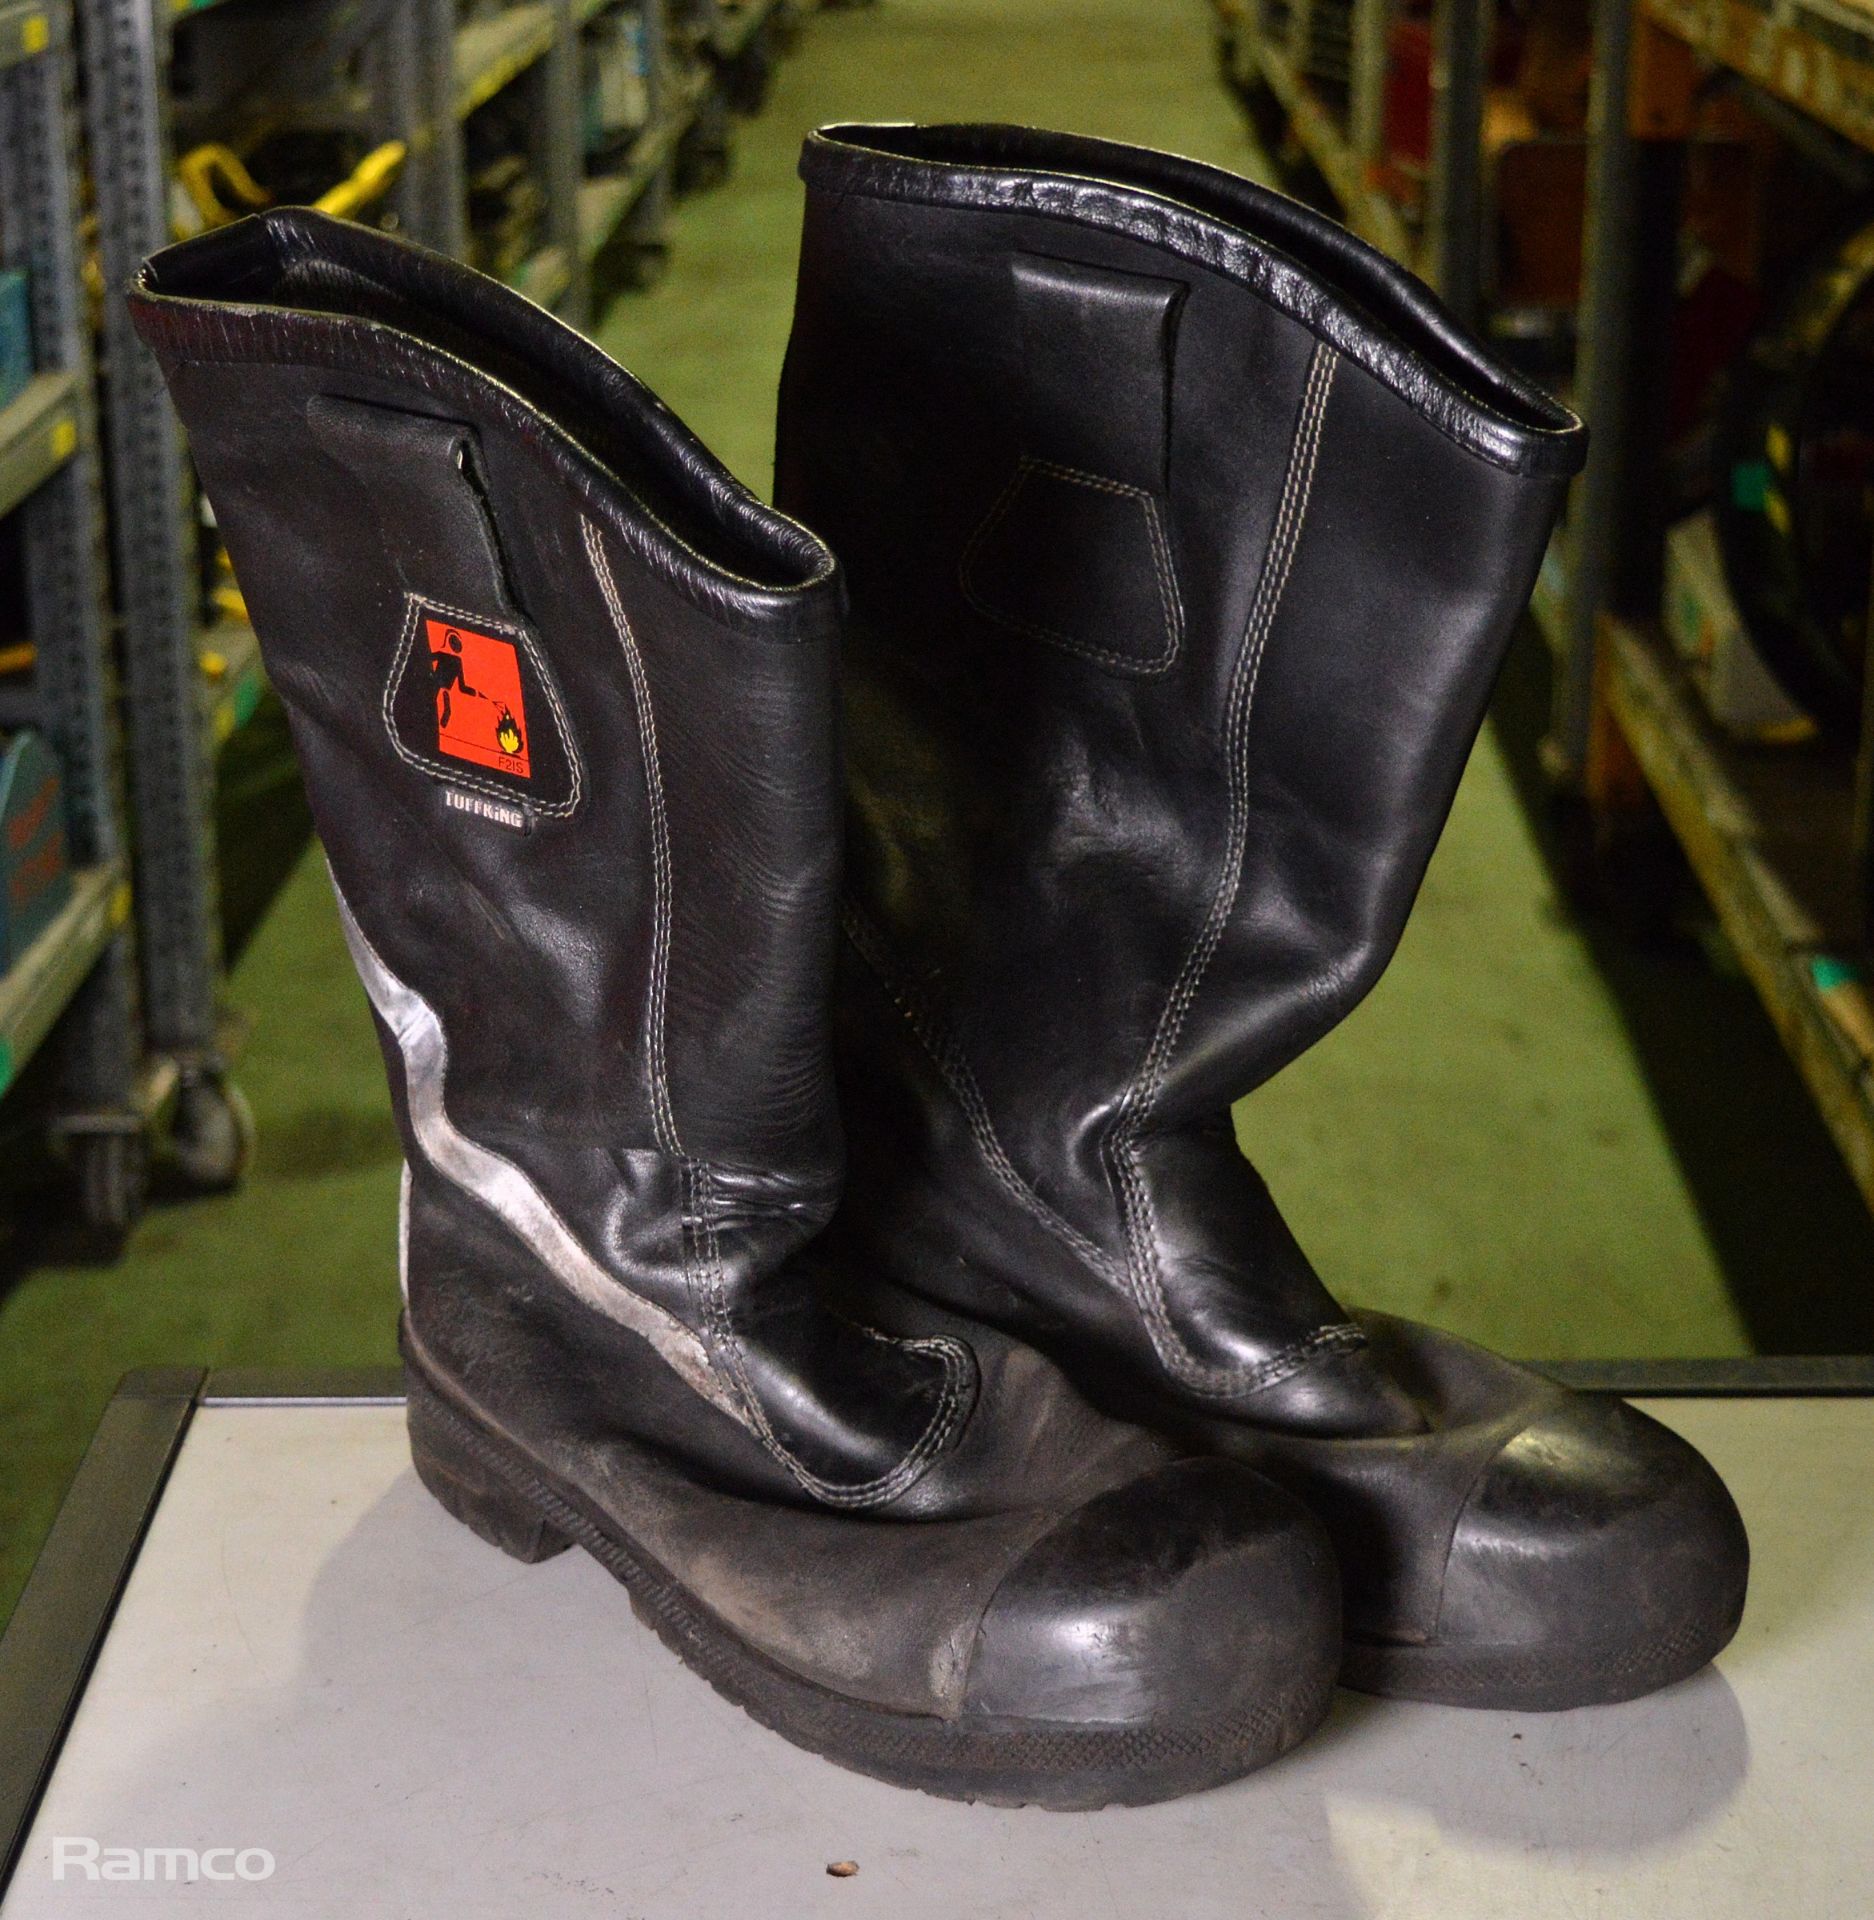 Tuffking Fire Retardant Boots, Size 11